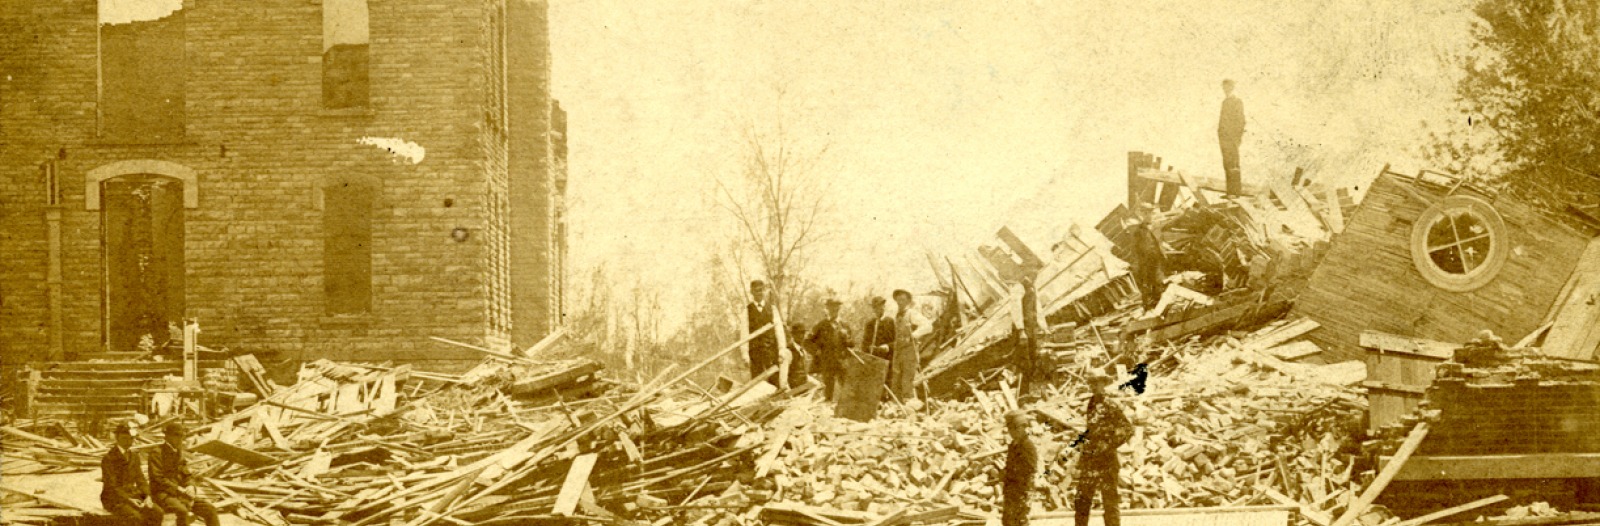 Two men survey destroyed buildings